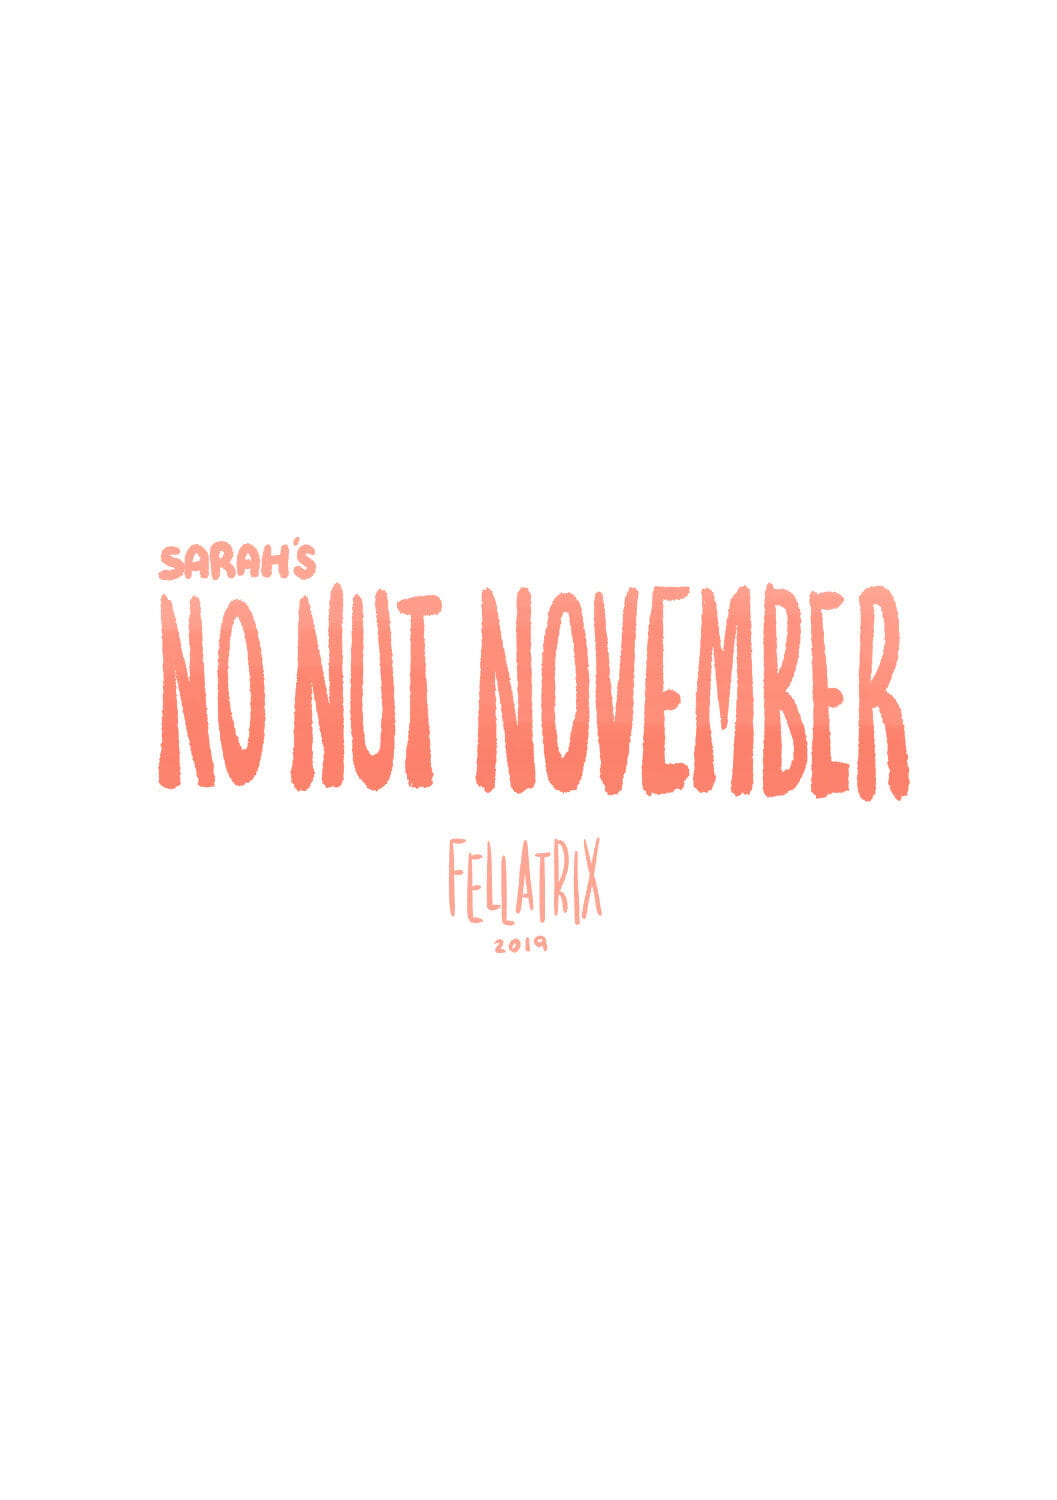 Sarahs No Nut November page 1